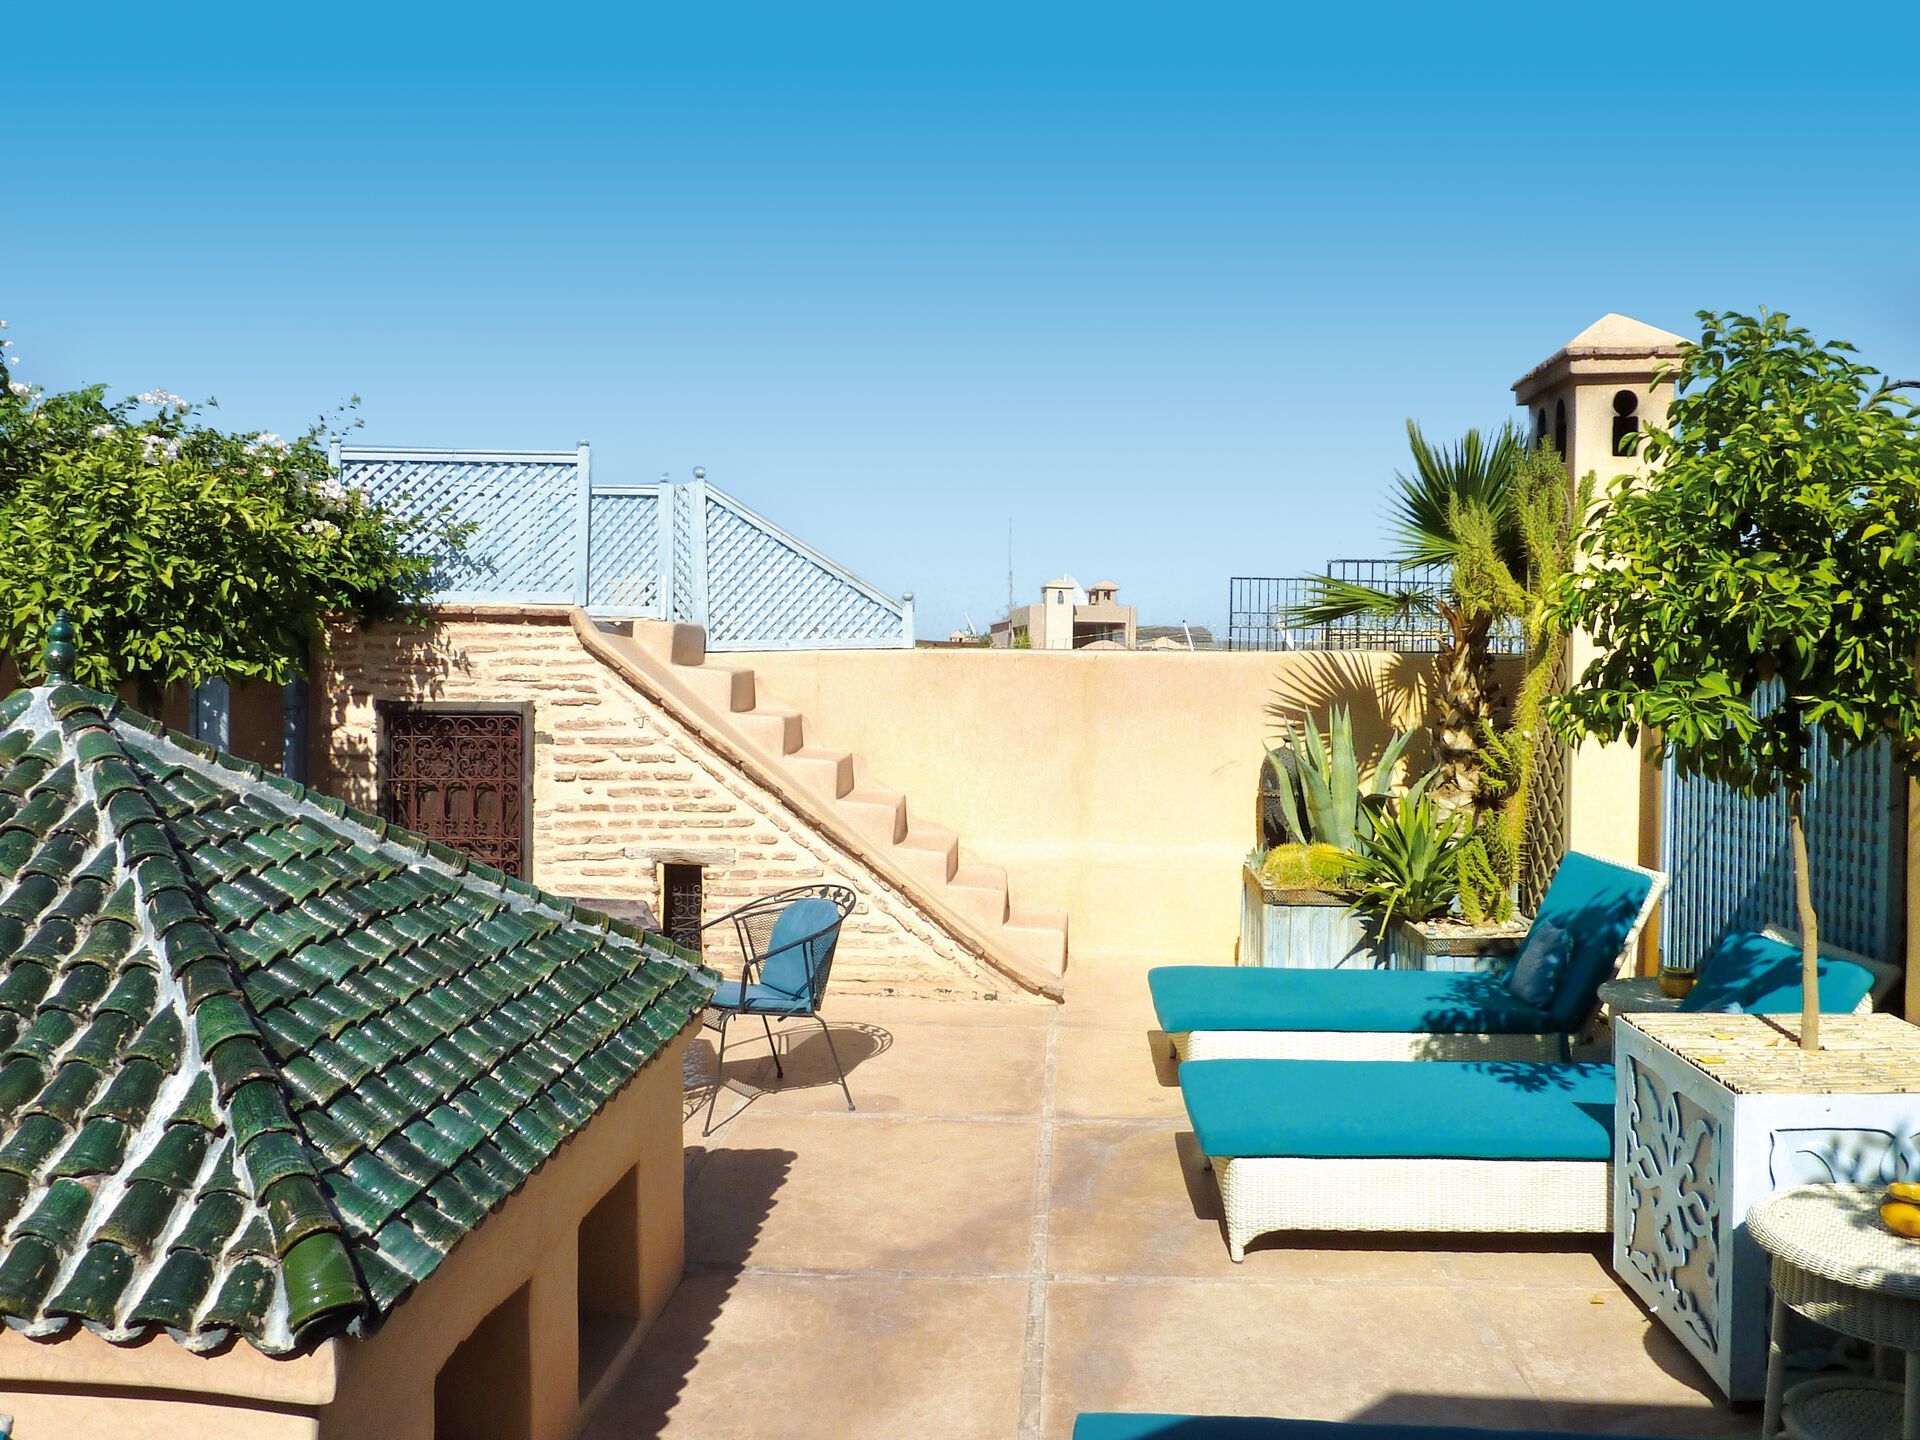 Maroc - Marrakech - Hôtel Riad Armelle 4*